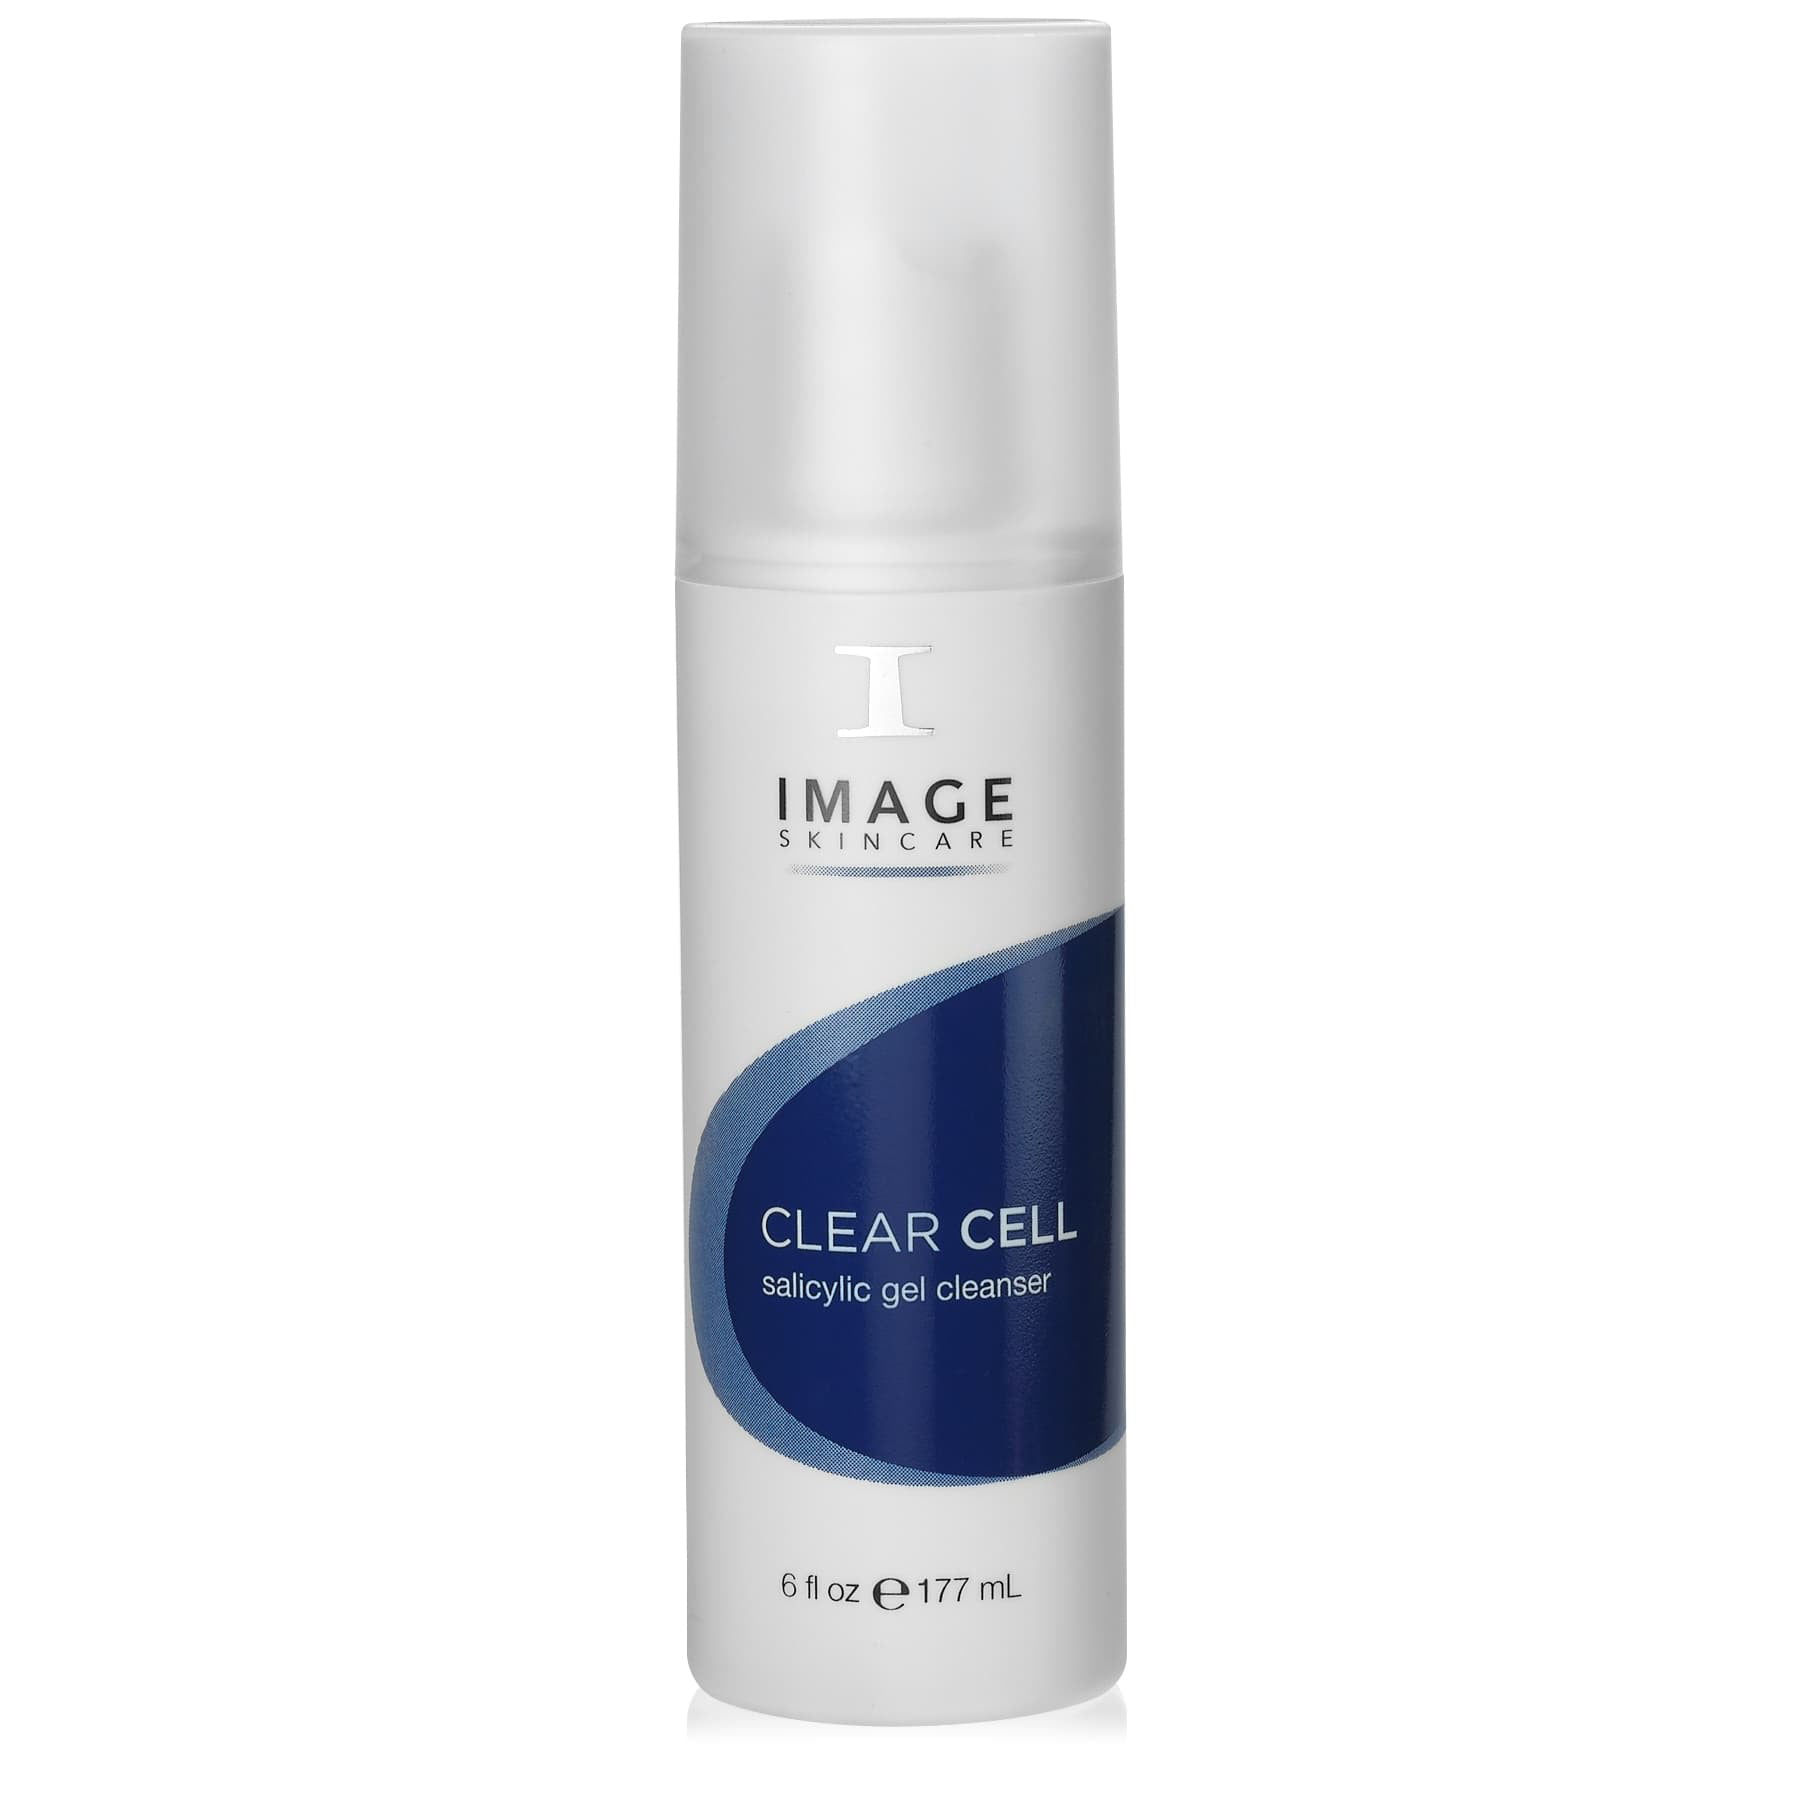 Clear Cell Medicated acne Lotion. Эмульсия Clear Cell. Image Clear Cell очищающий салициловый гель 177мл. Пенка для умывания image Skincare.